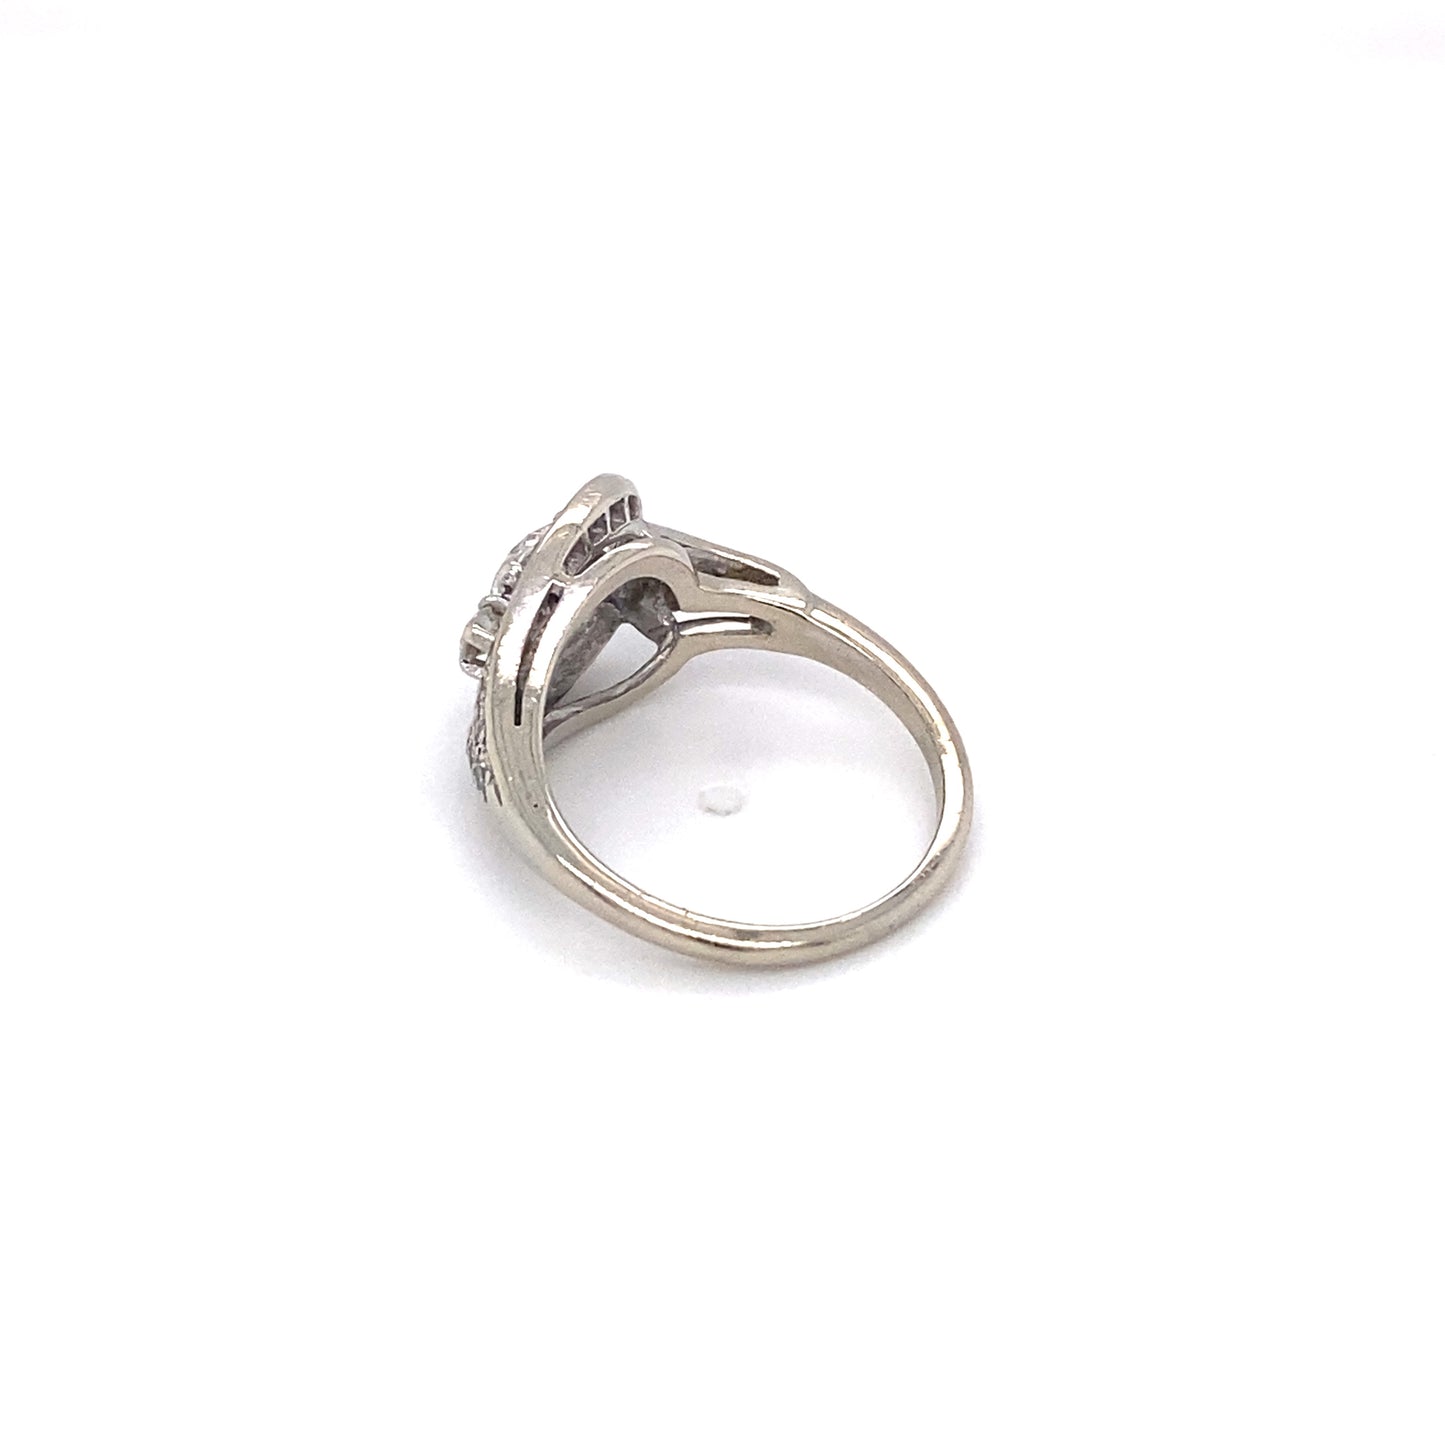 Circa 1920s 0.80 Carat Diamond Loop Ring in 14K White Gold and Platinum